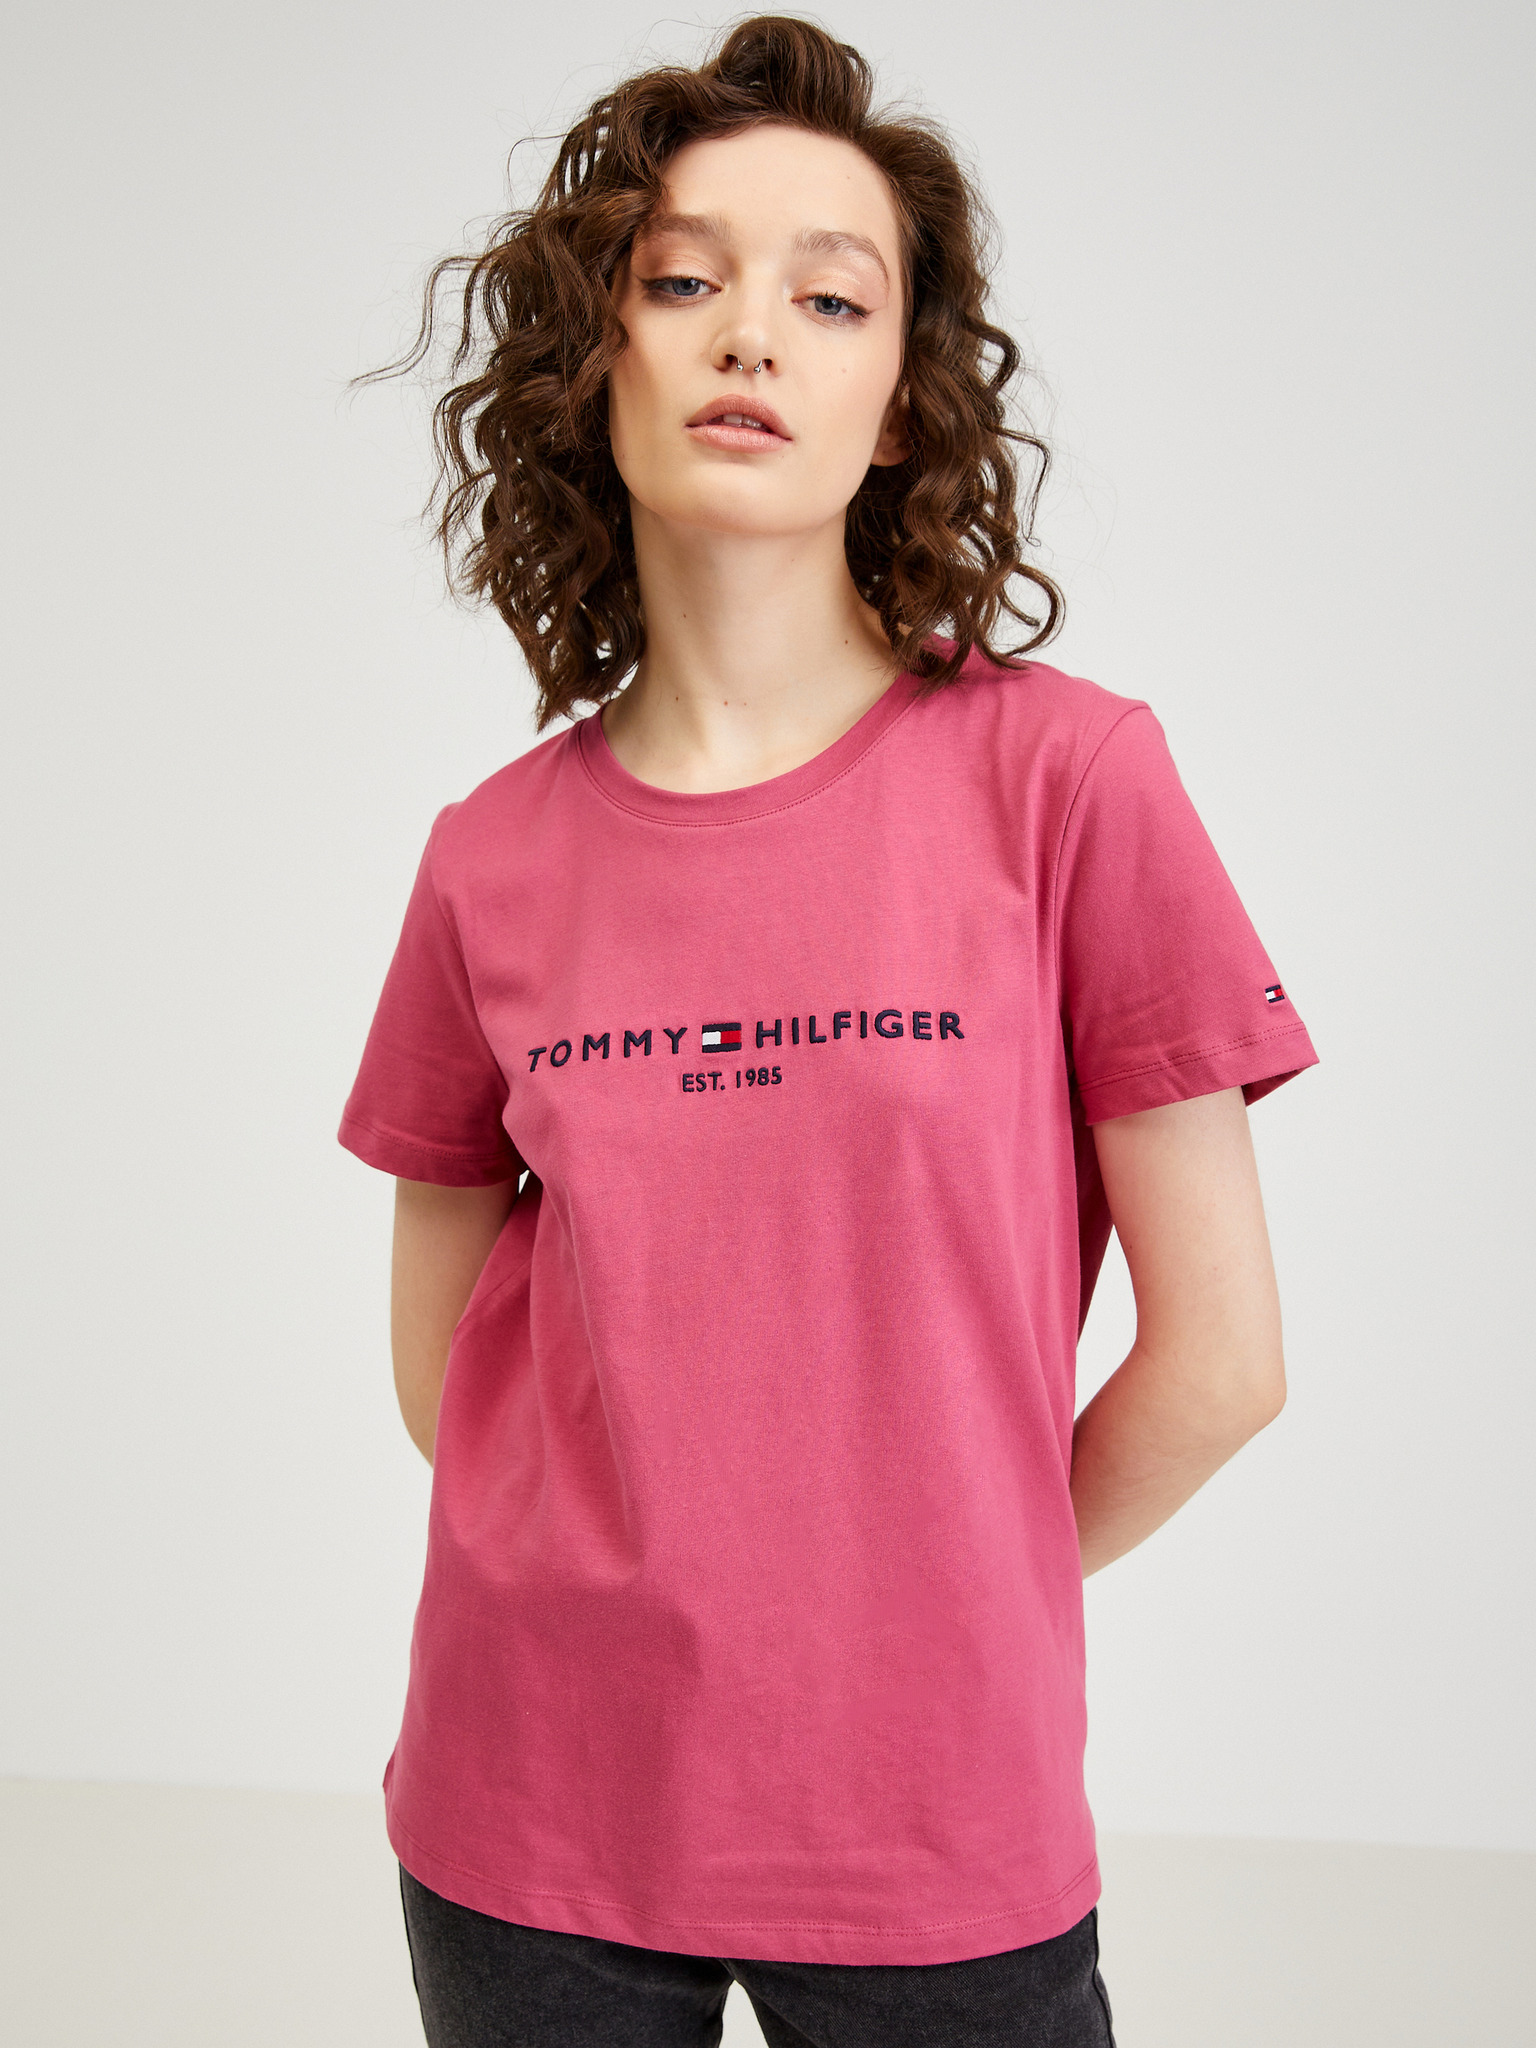 TOMMY HILFIGER t-shirt Pink for girls